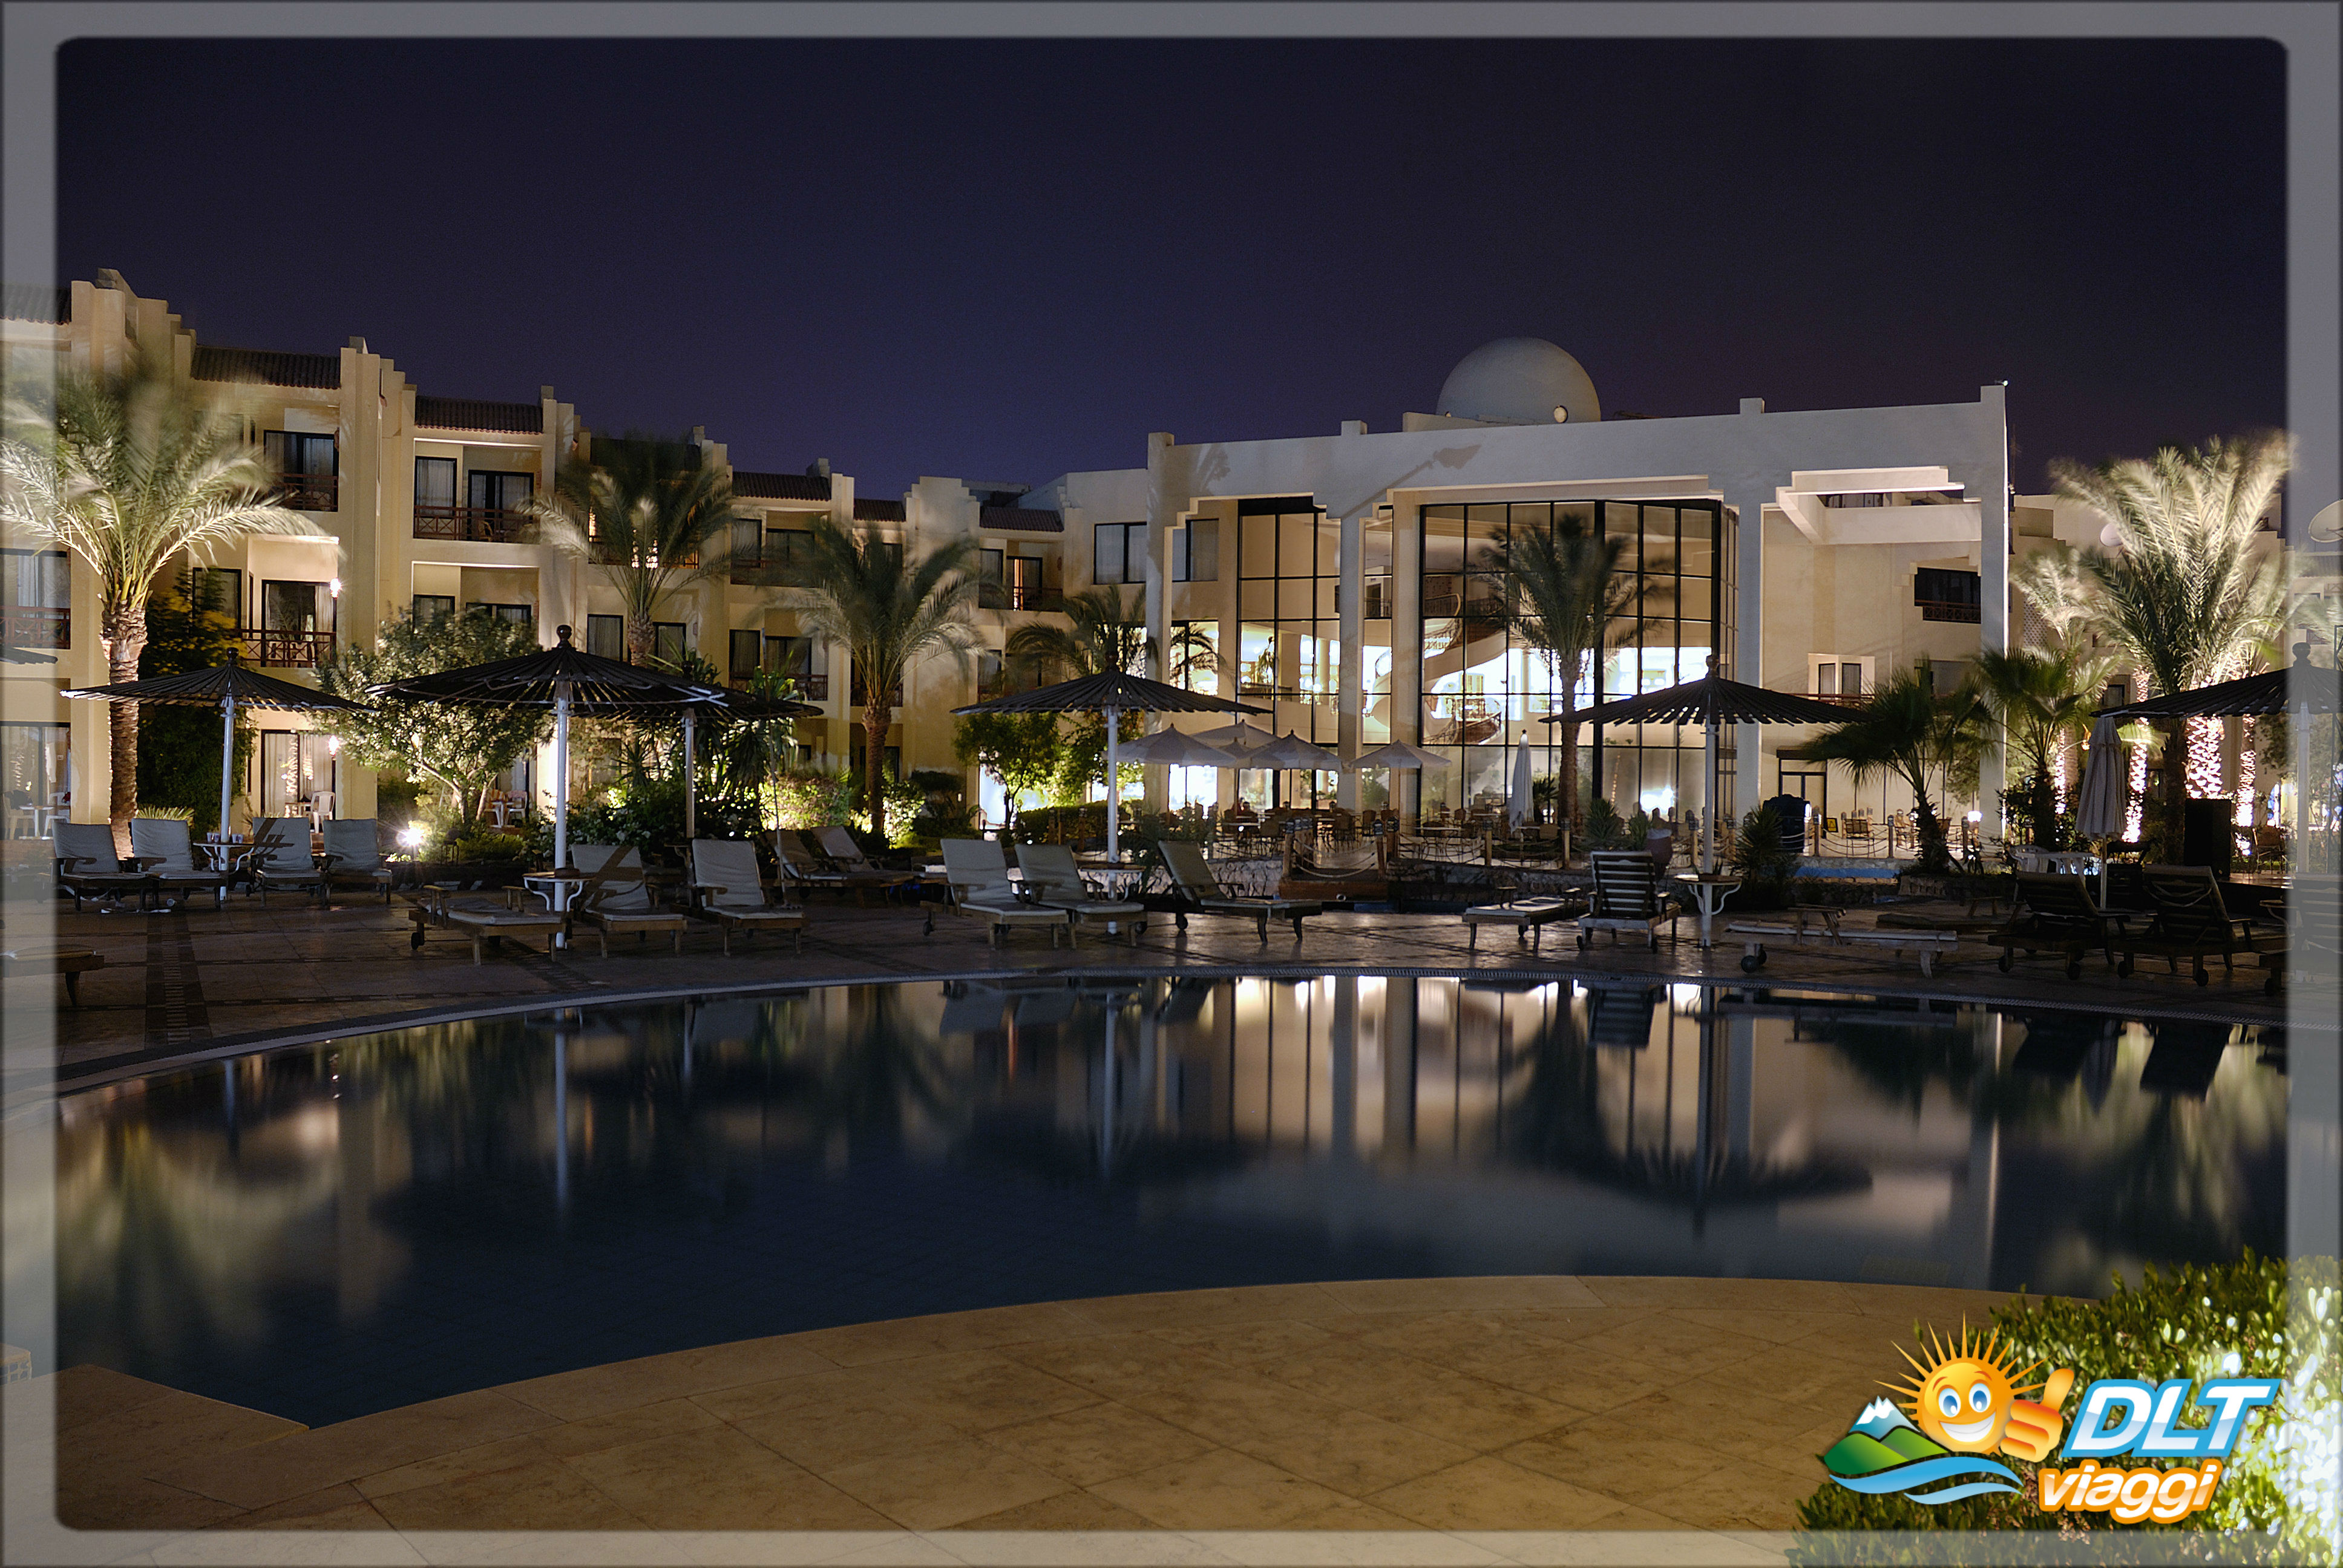 Grand Plaza Hotel Hurghada Egypt Dlttravel